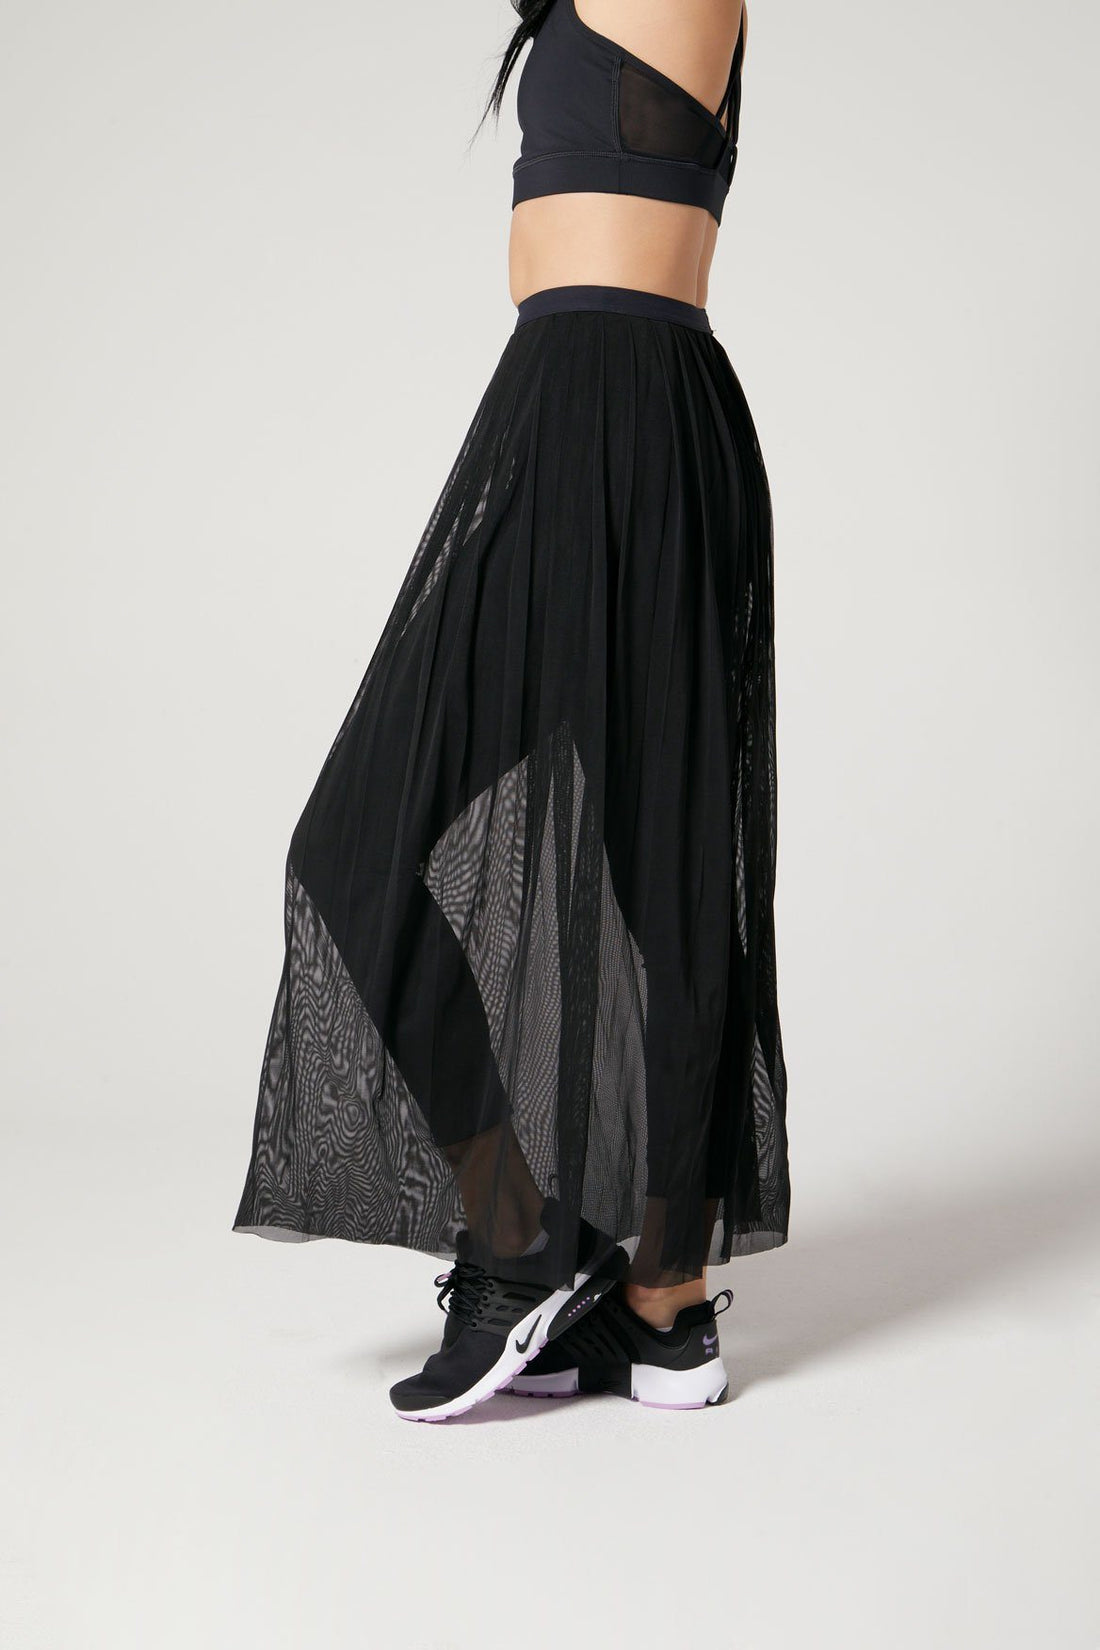 Cheap black skirt mesh big sale  OFF 63